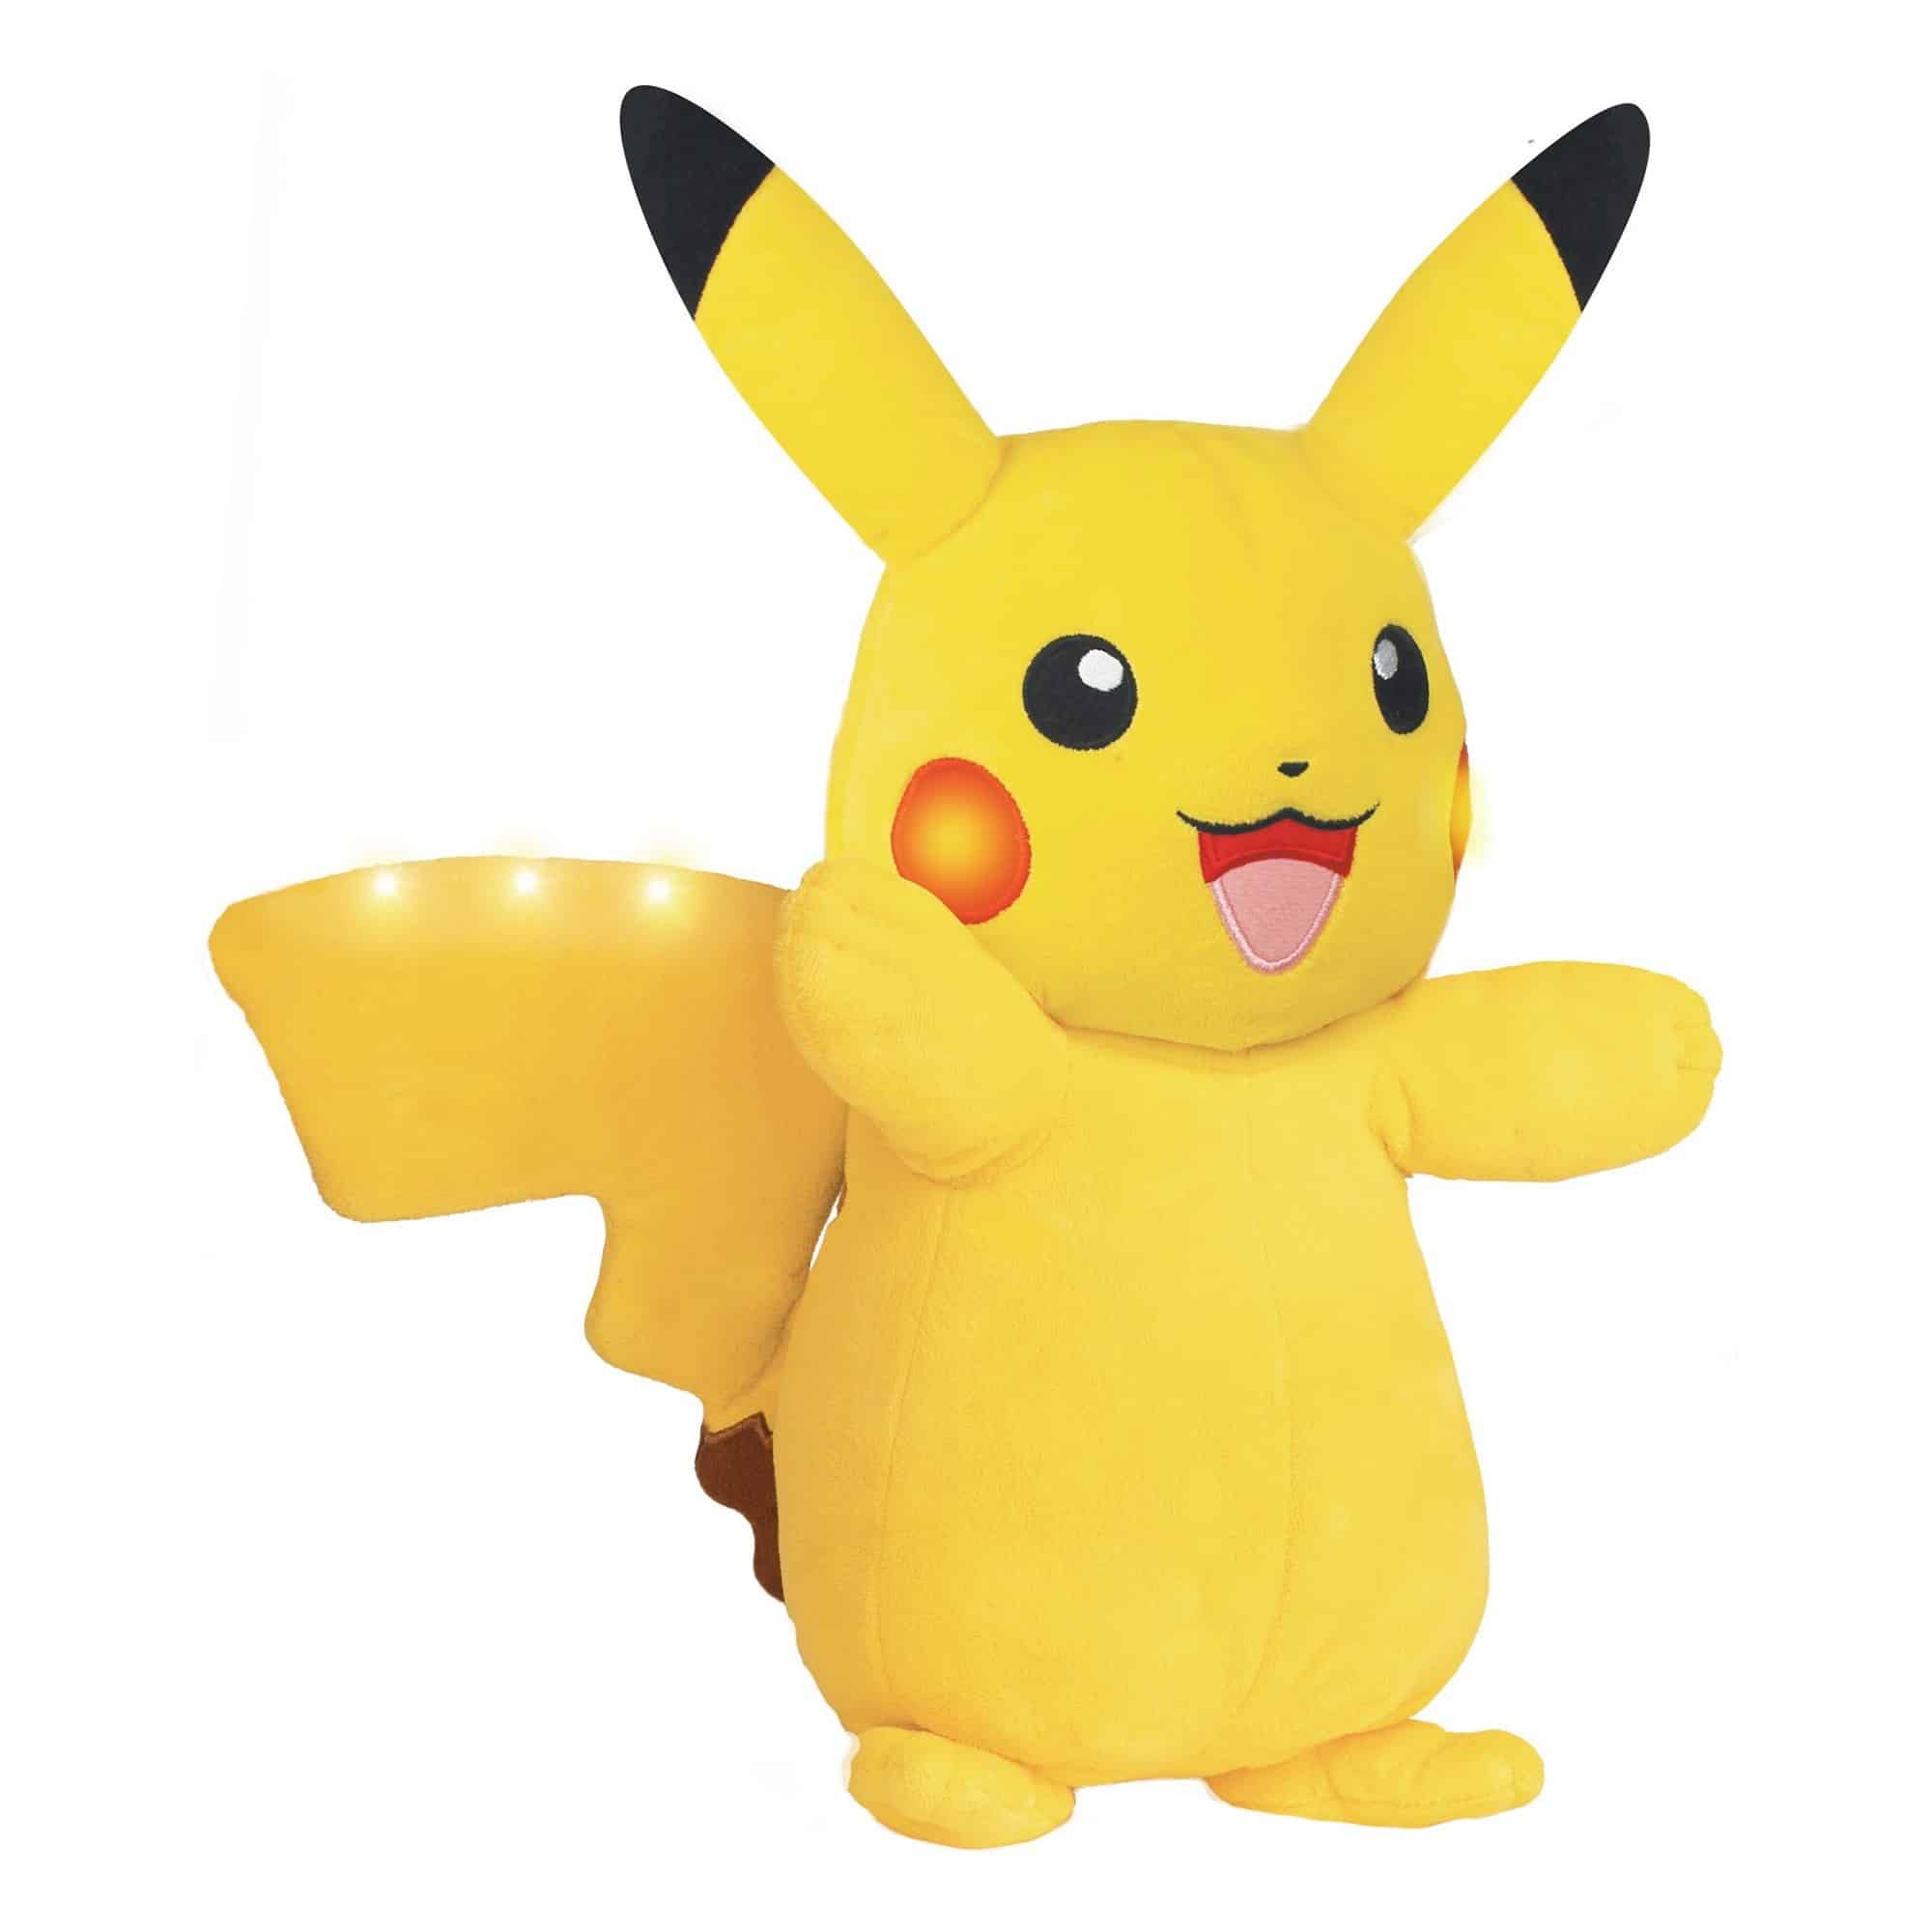 Pokémon - Power Action Pikachu